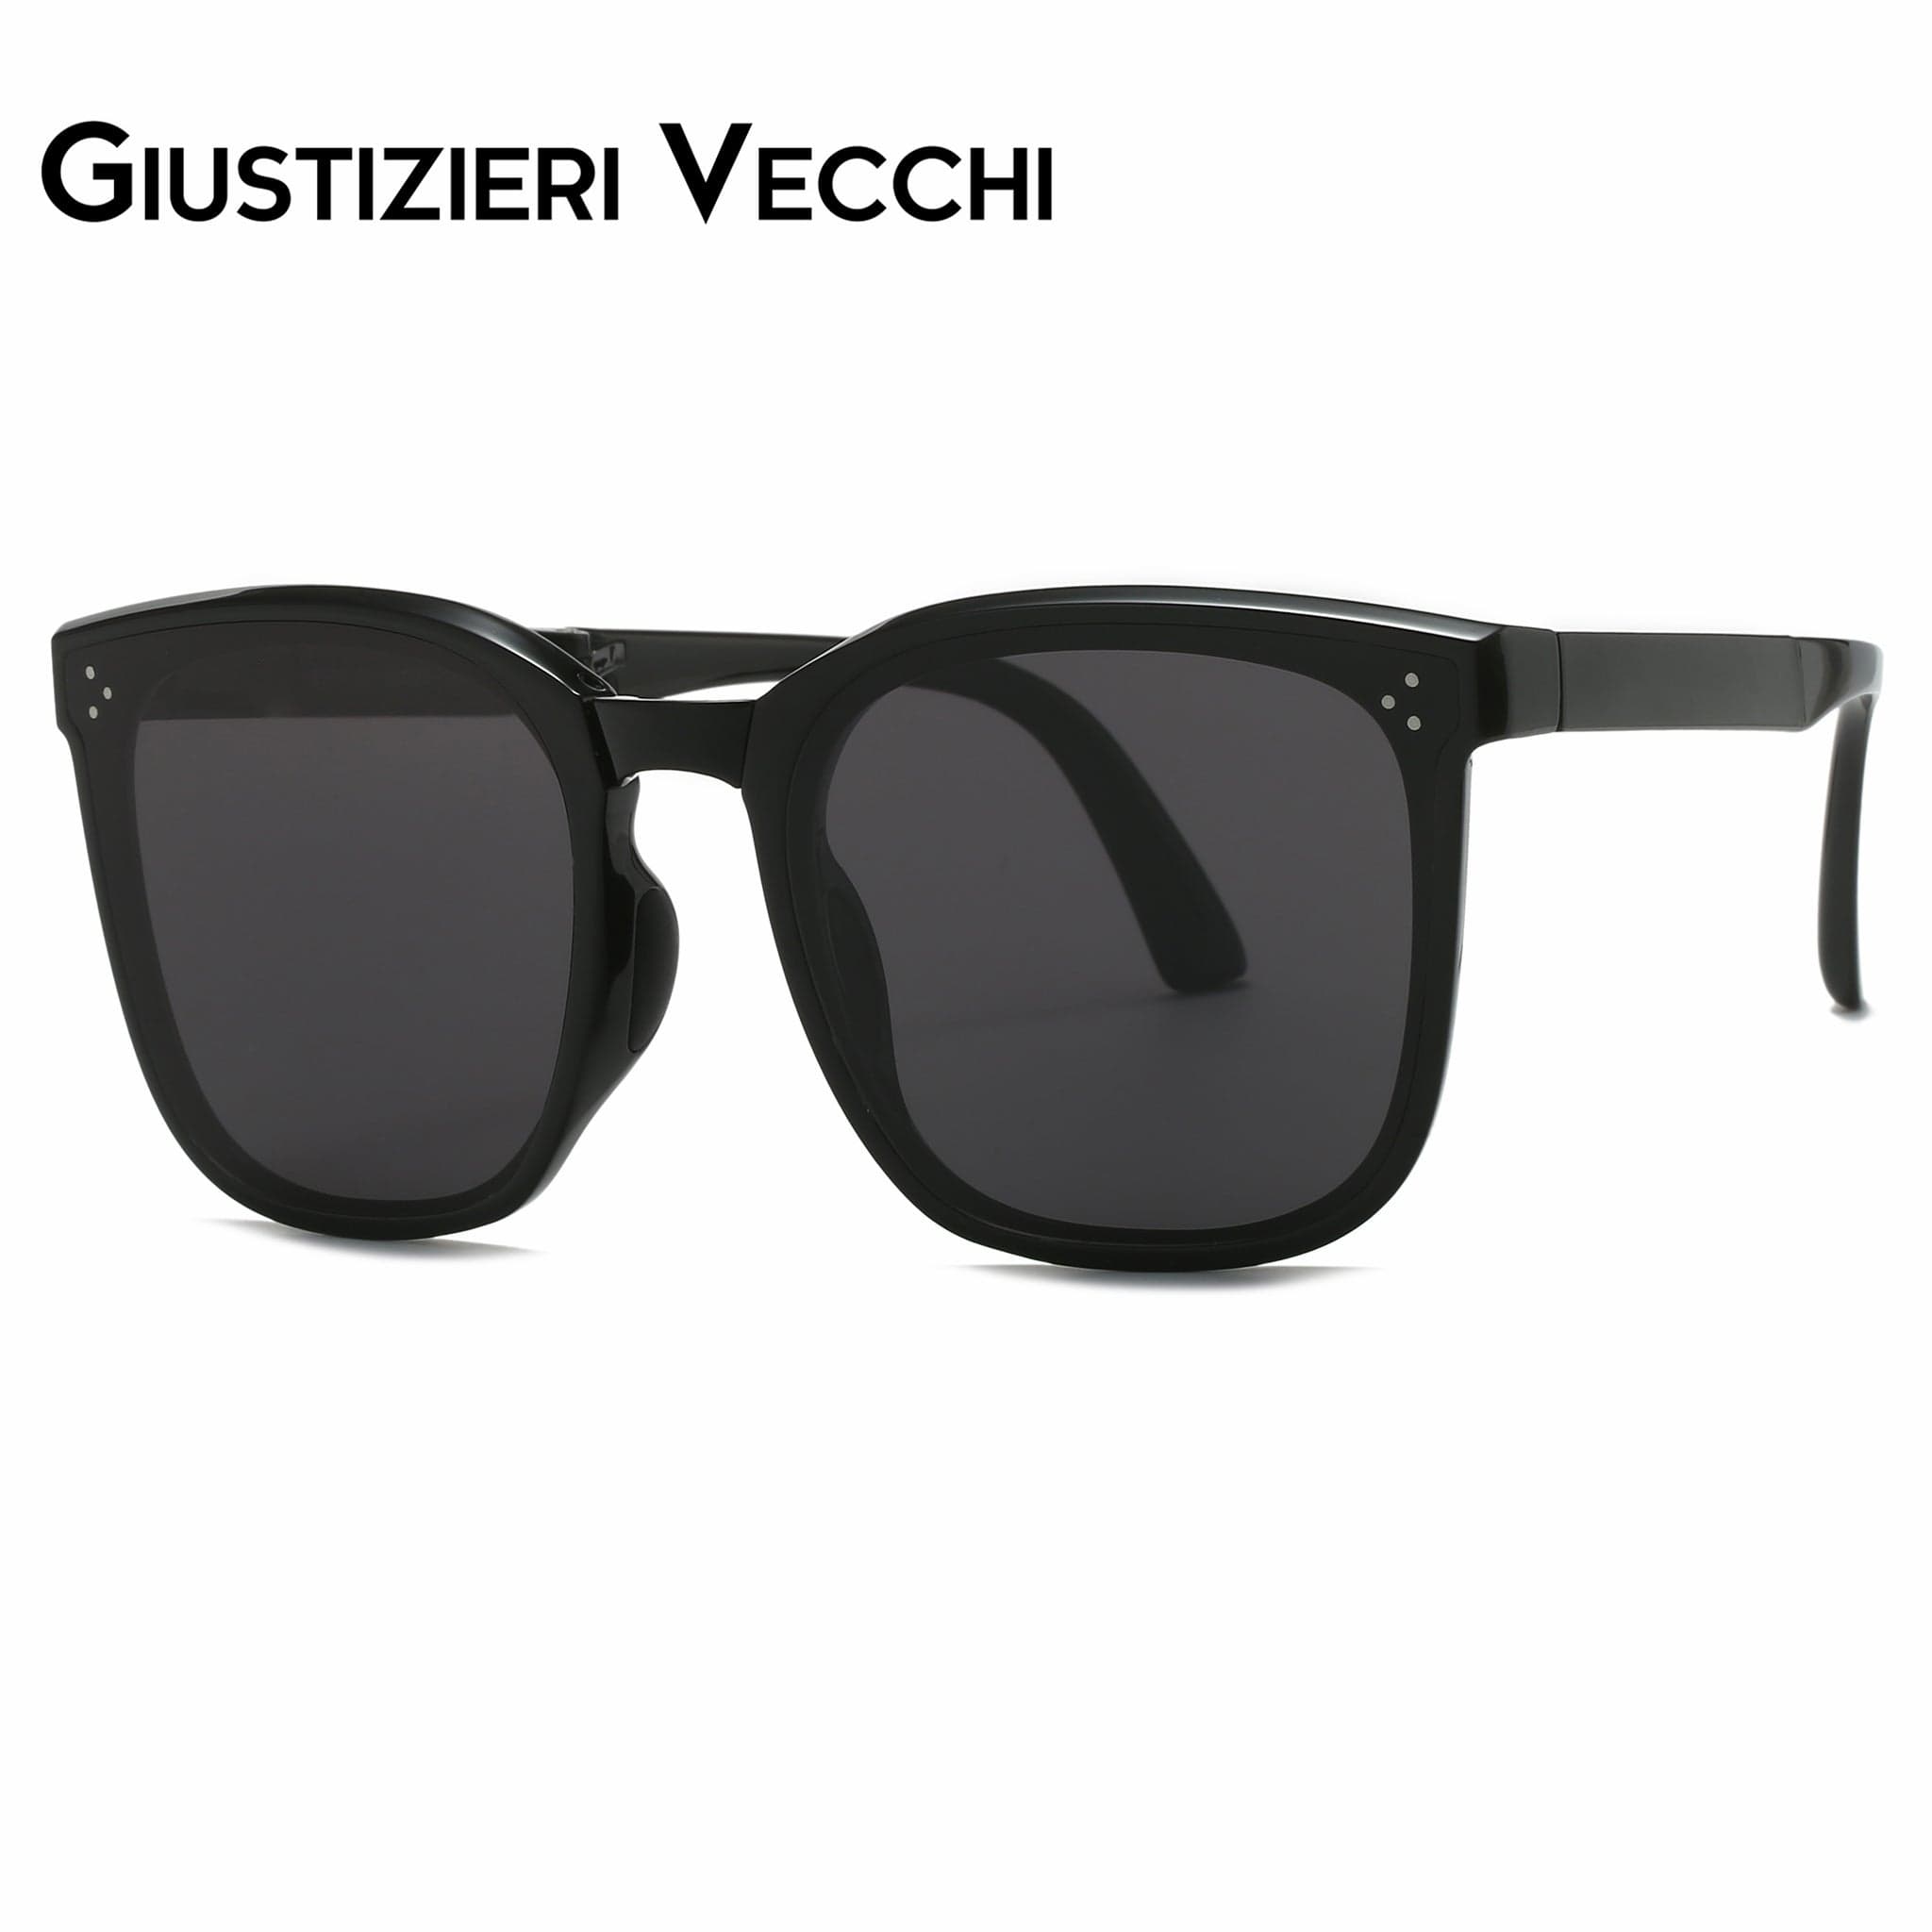 GIUSTIZIERI VECCHI Sunglasses Medium / Black Sassy Chic Tre